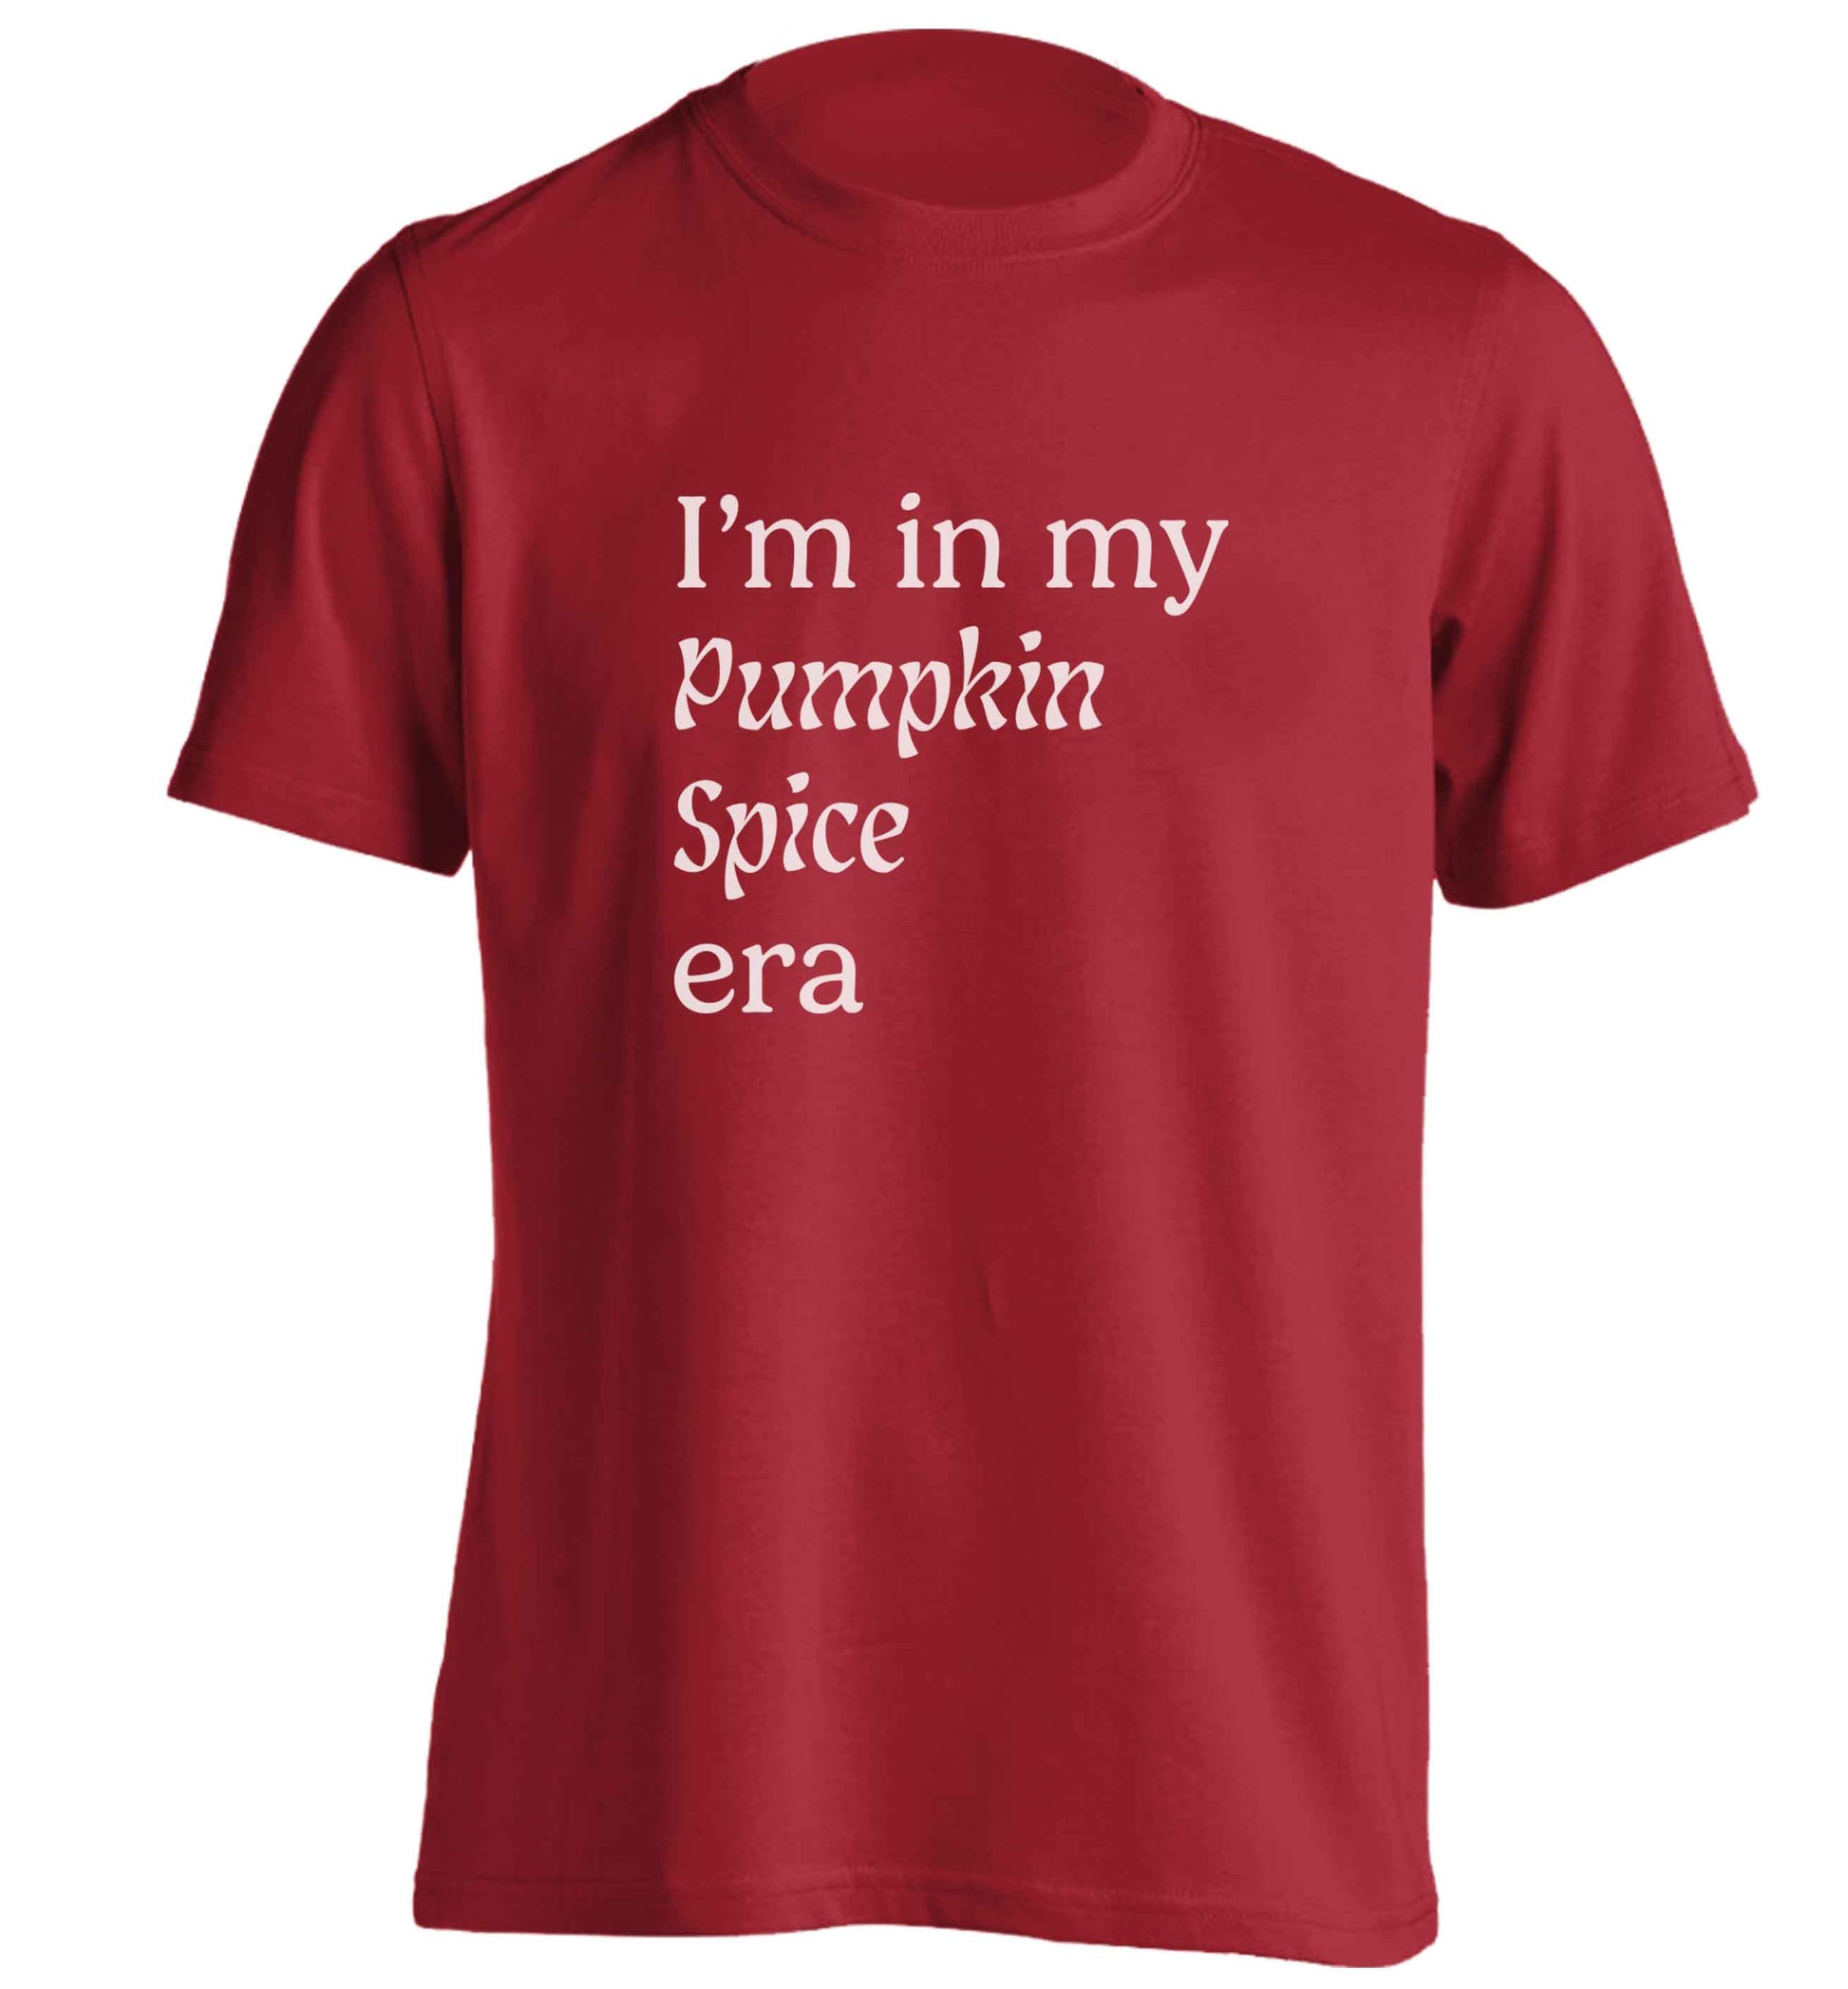 I'm in my pumpkin spice era Kit adults unisex red Tshirt 2XL